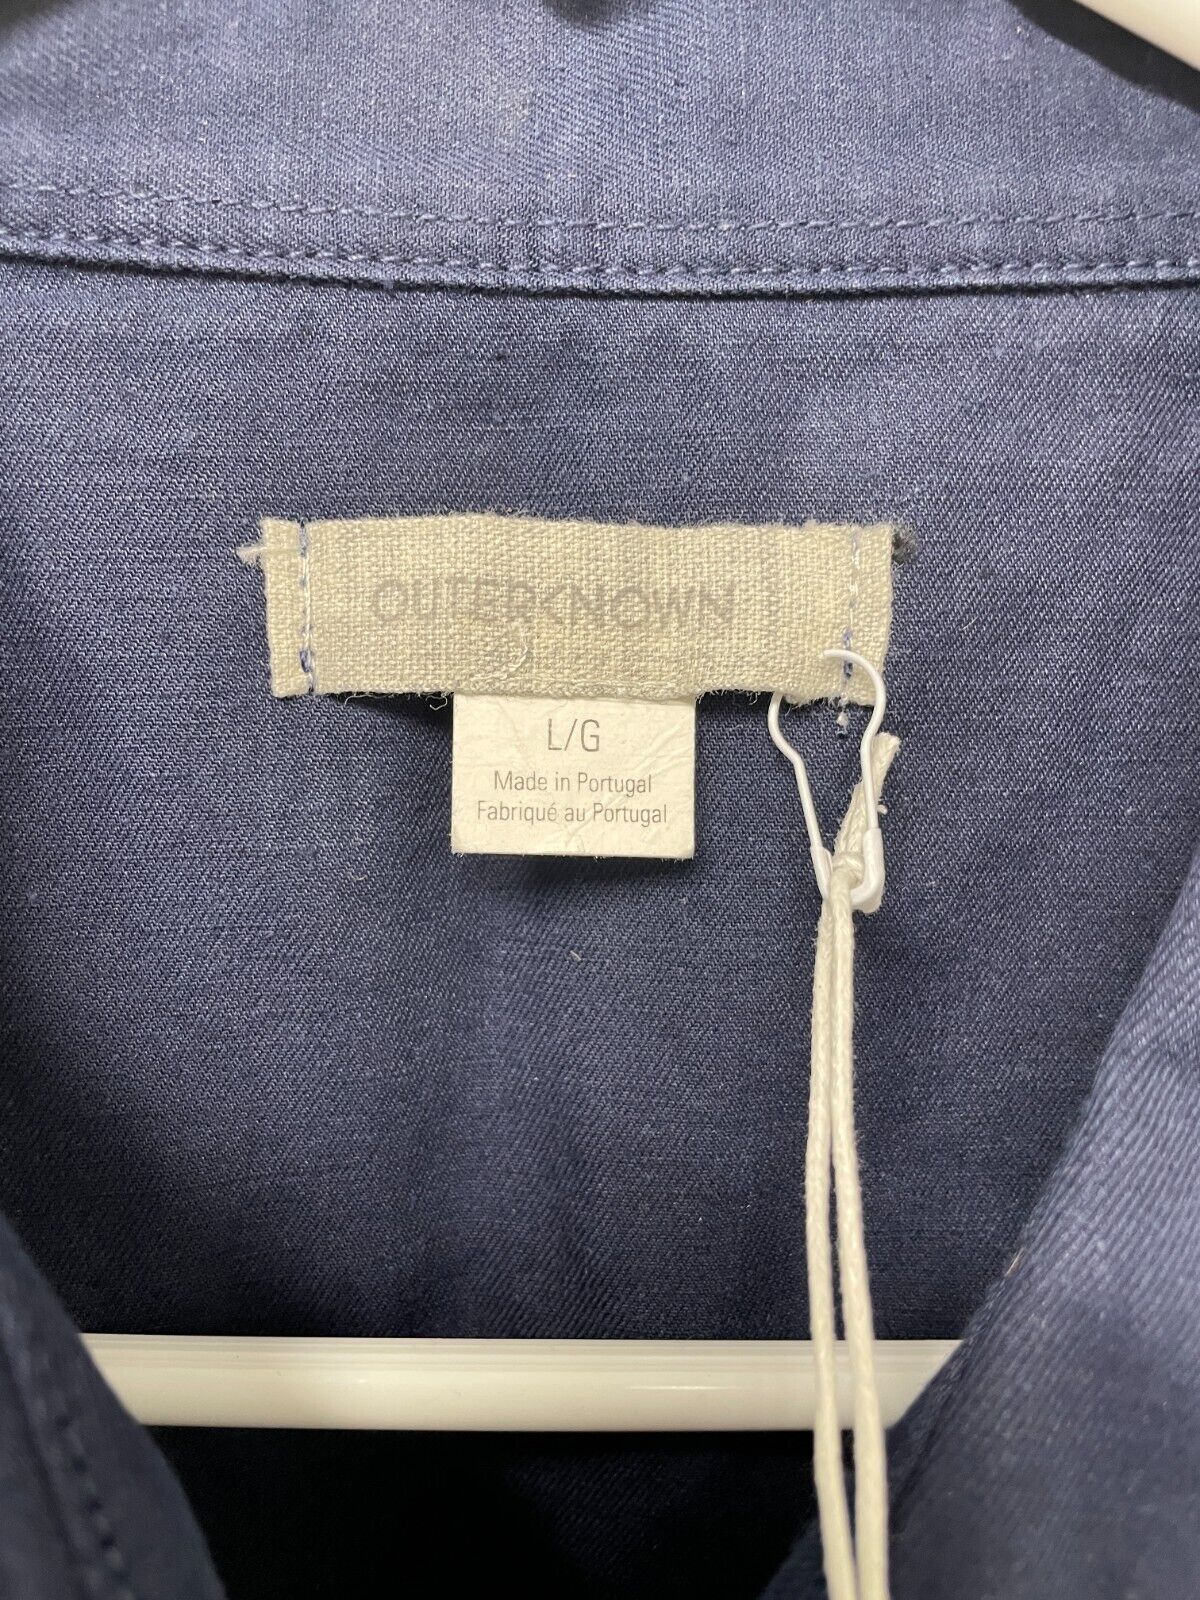 Outerknown Women's L S.E.A. Suit Shortall Navy Blue Organic Cotton Linen Romper